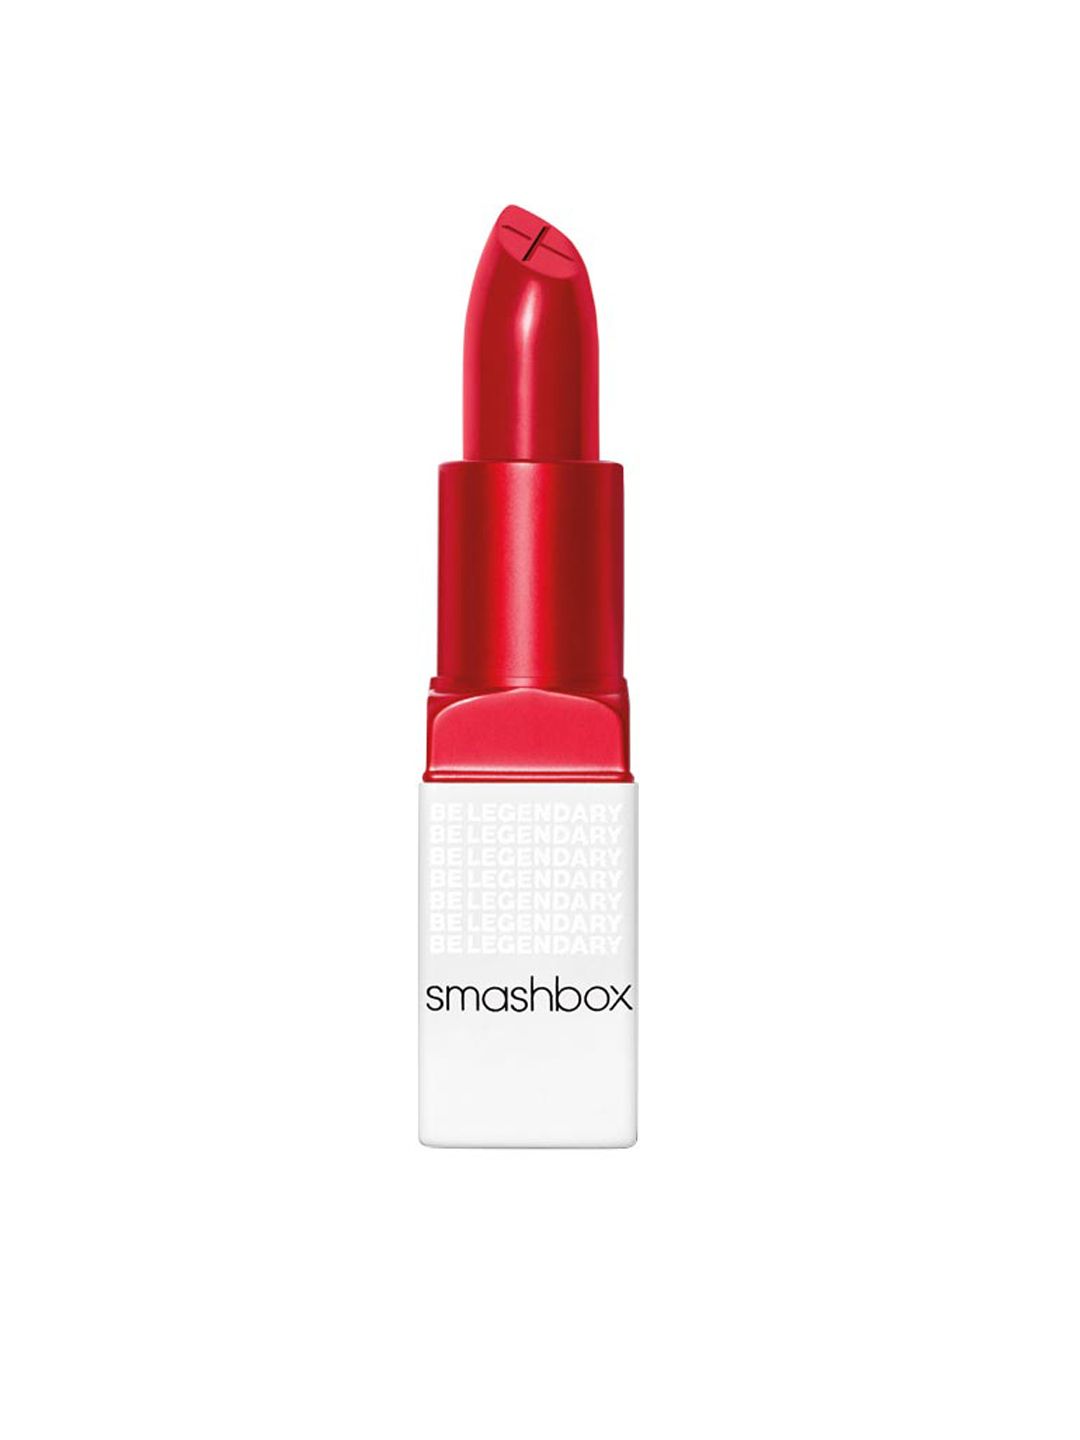 Smashbox Be Legendary Prime & Plush Lipstick - Bawse Price in India